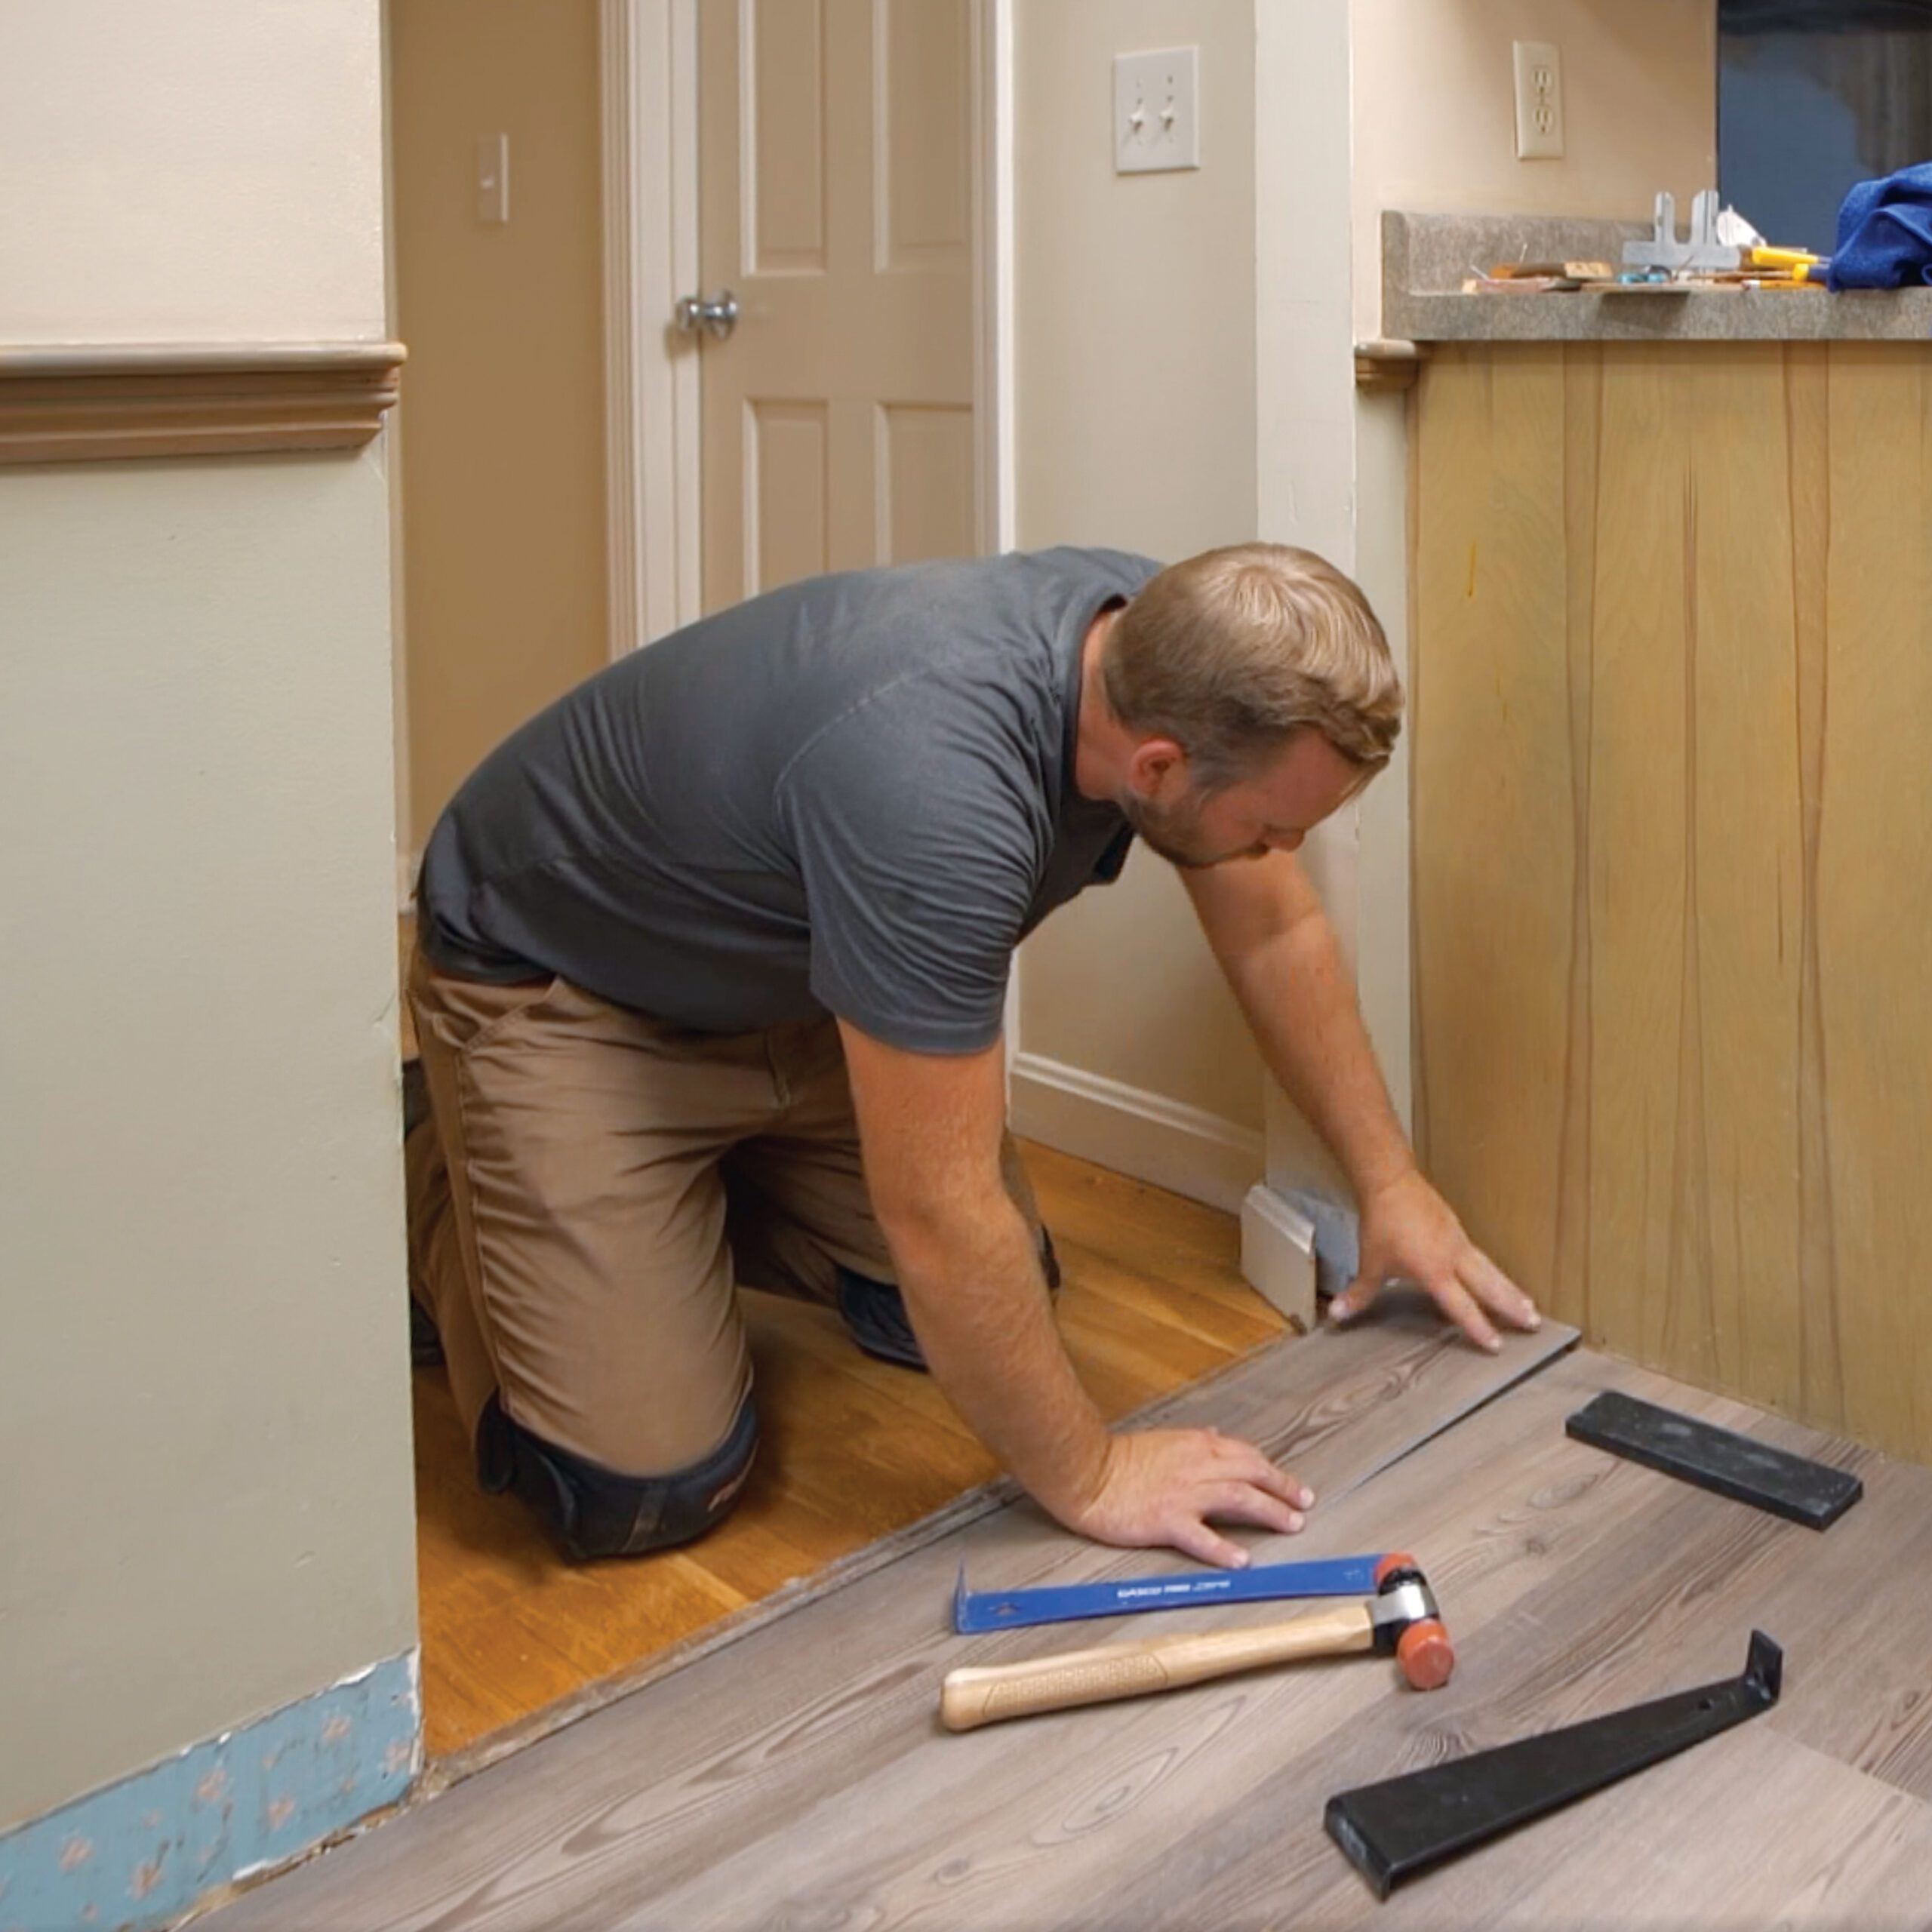 How to install floating vinyl plank flooring in 5 easy steps